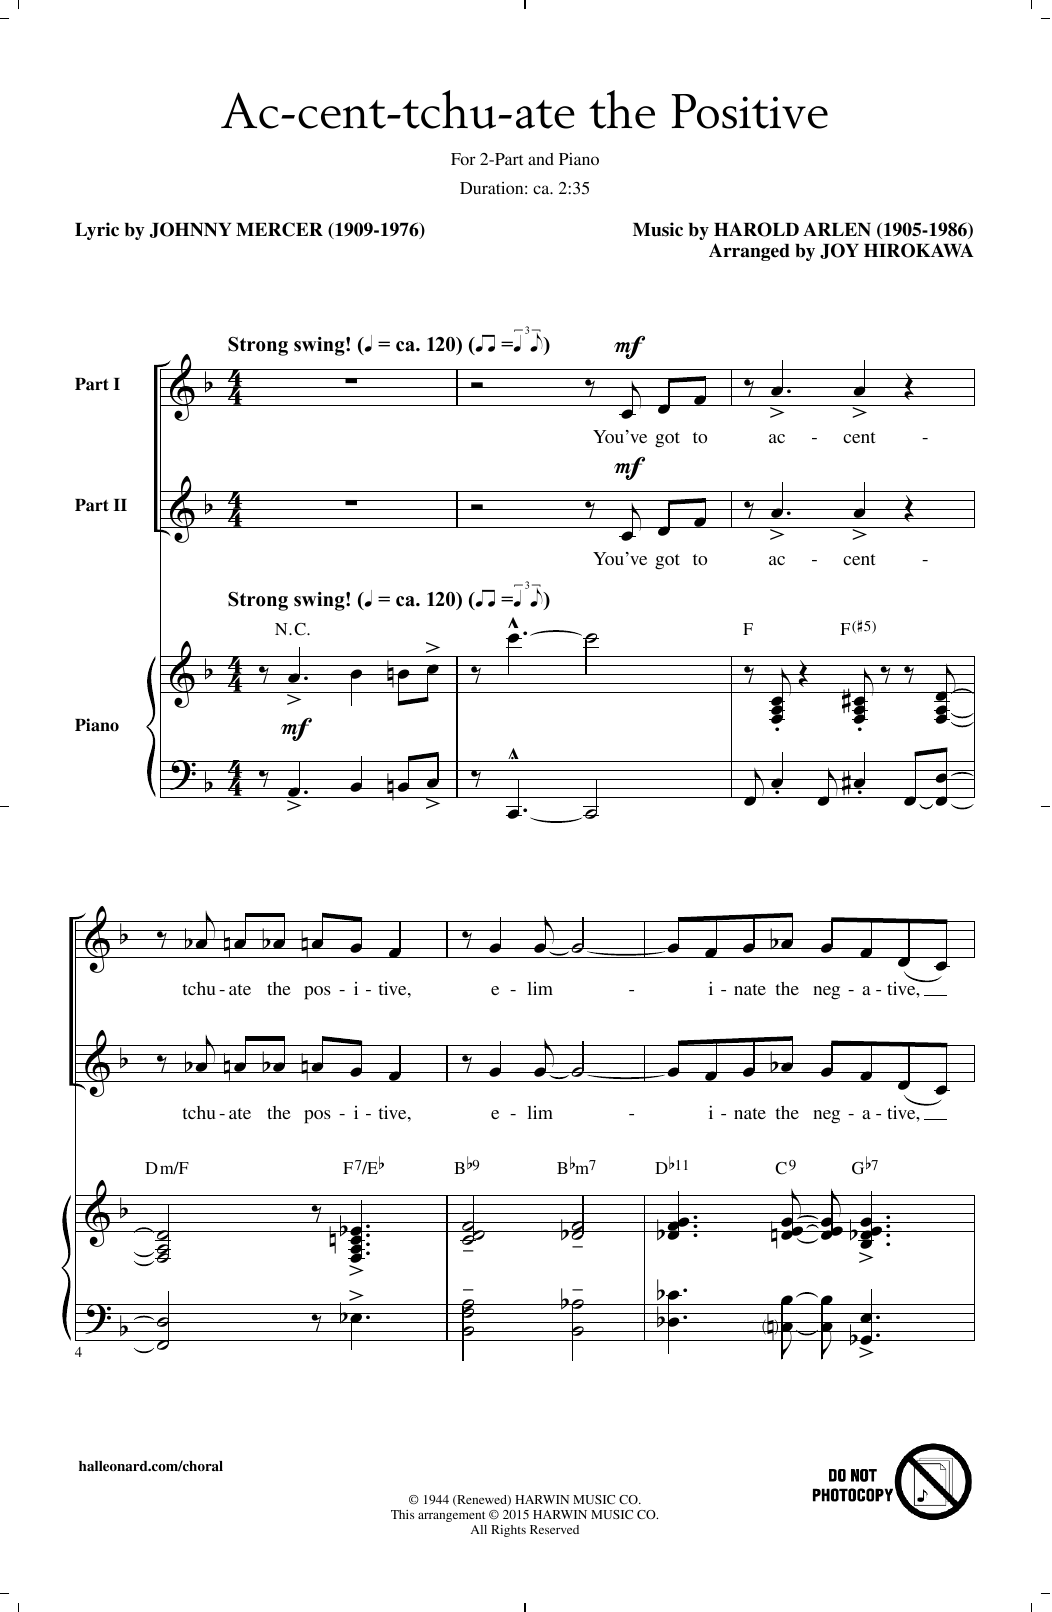 Harold Arlen Ac-cent-tchu-ate The Positive (arr. Joy Hirokawa) sheet music notes and chords arranged for 2-Part Choir